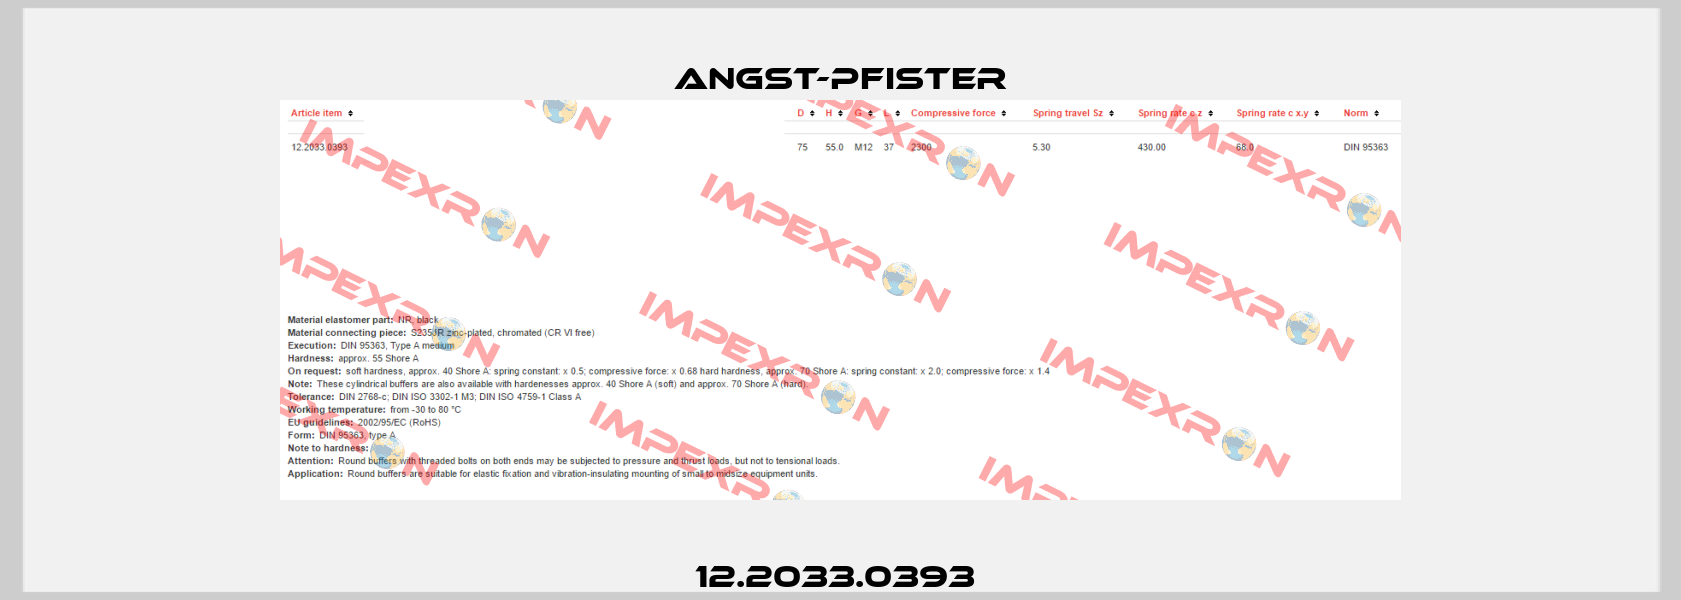 12.2033.0393  Angst-Pfister